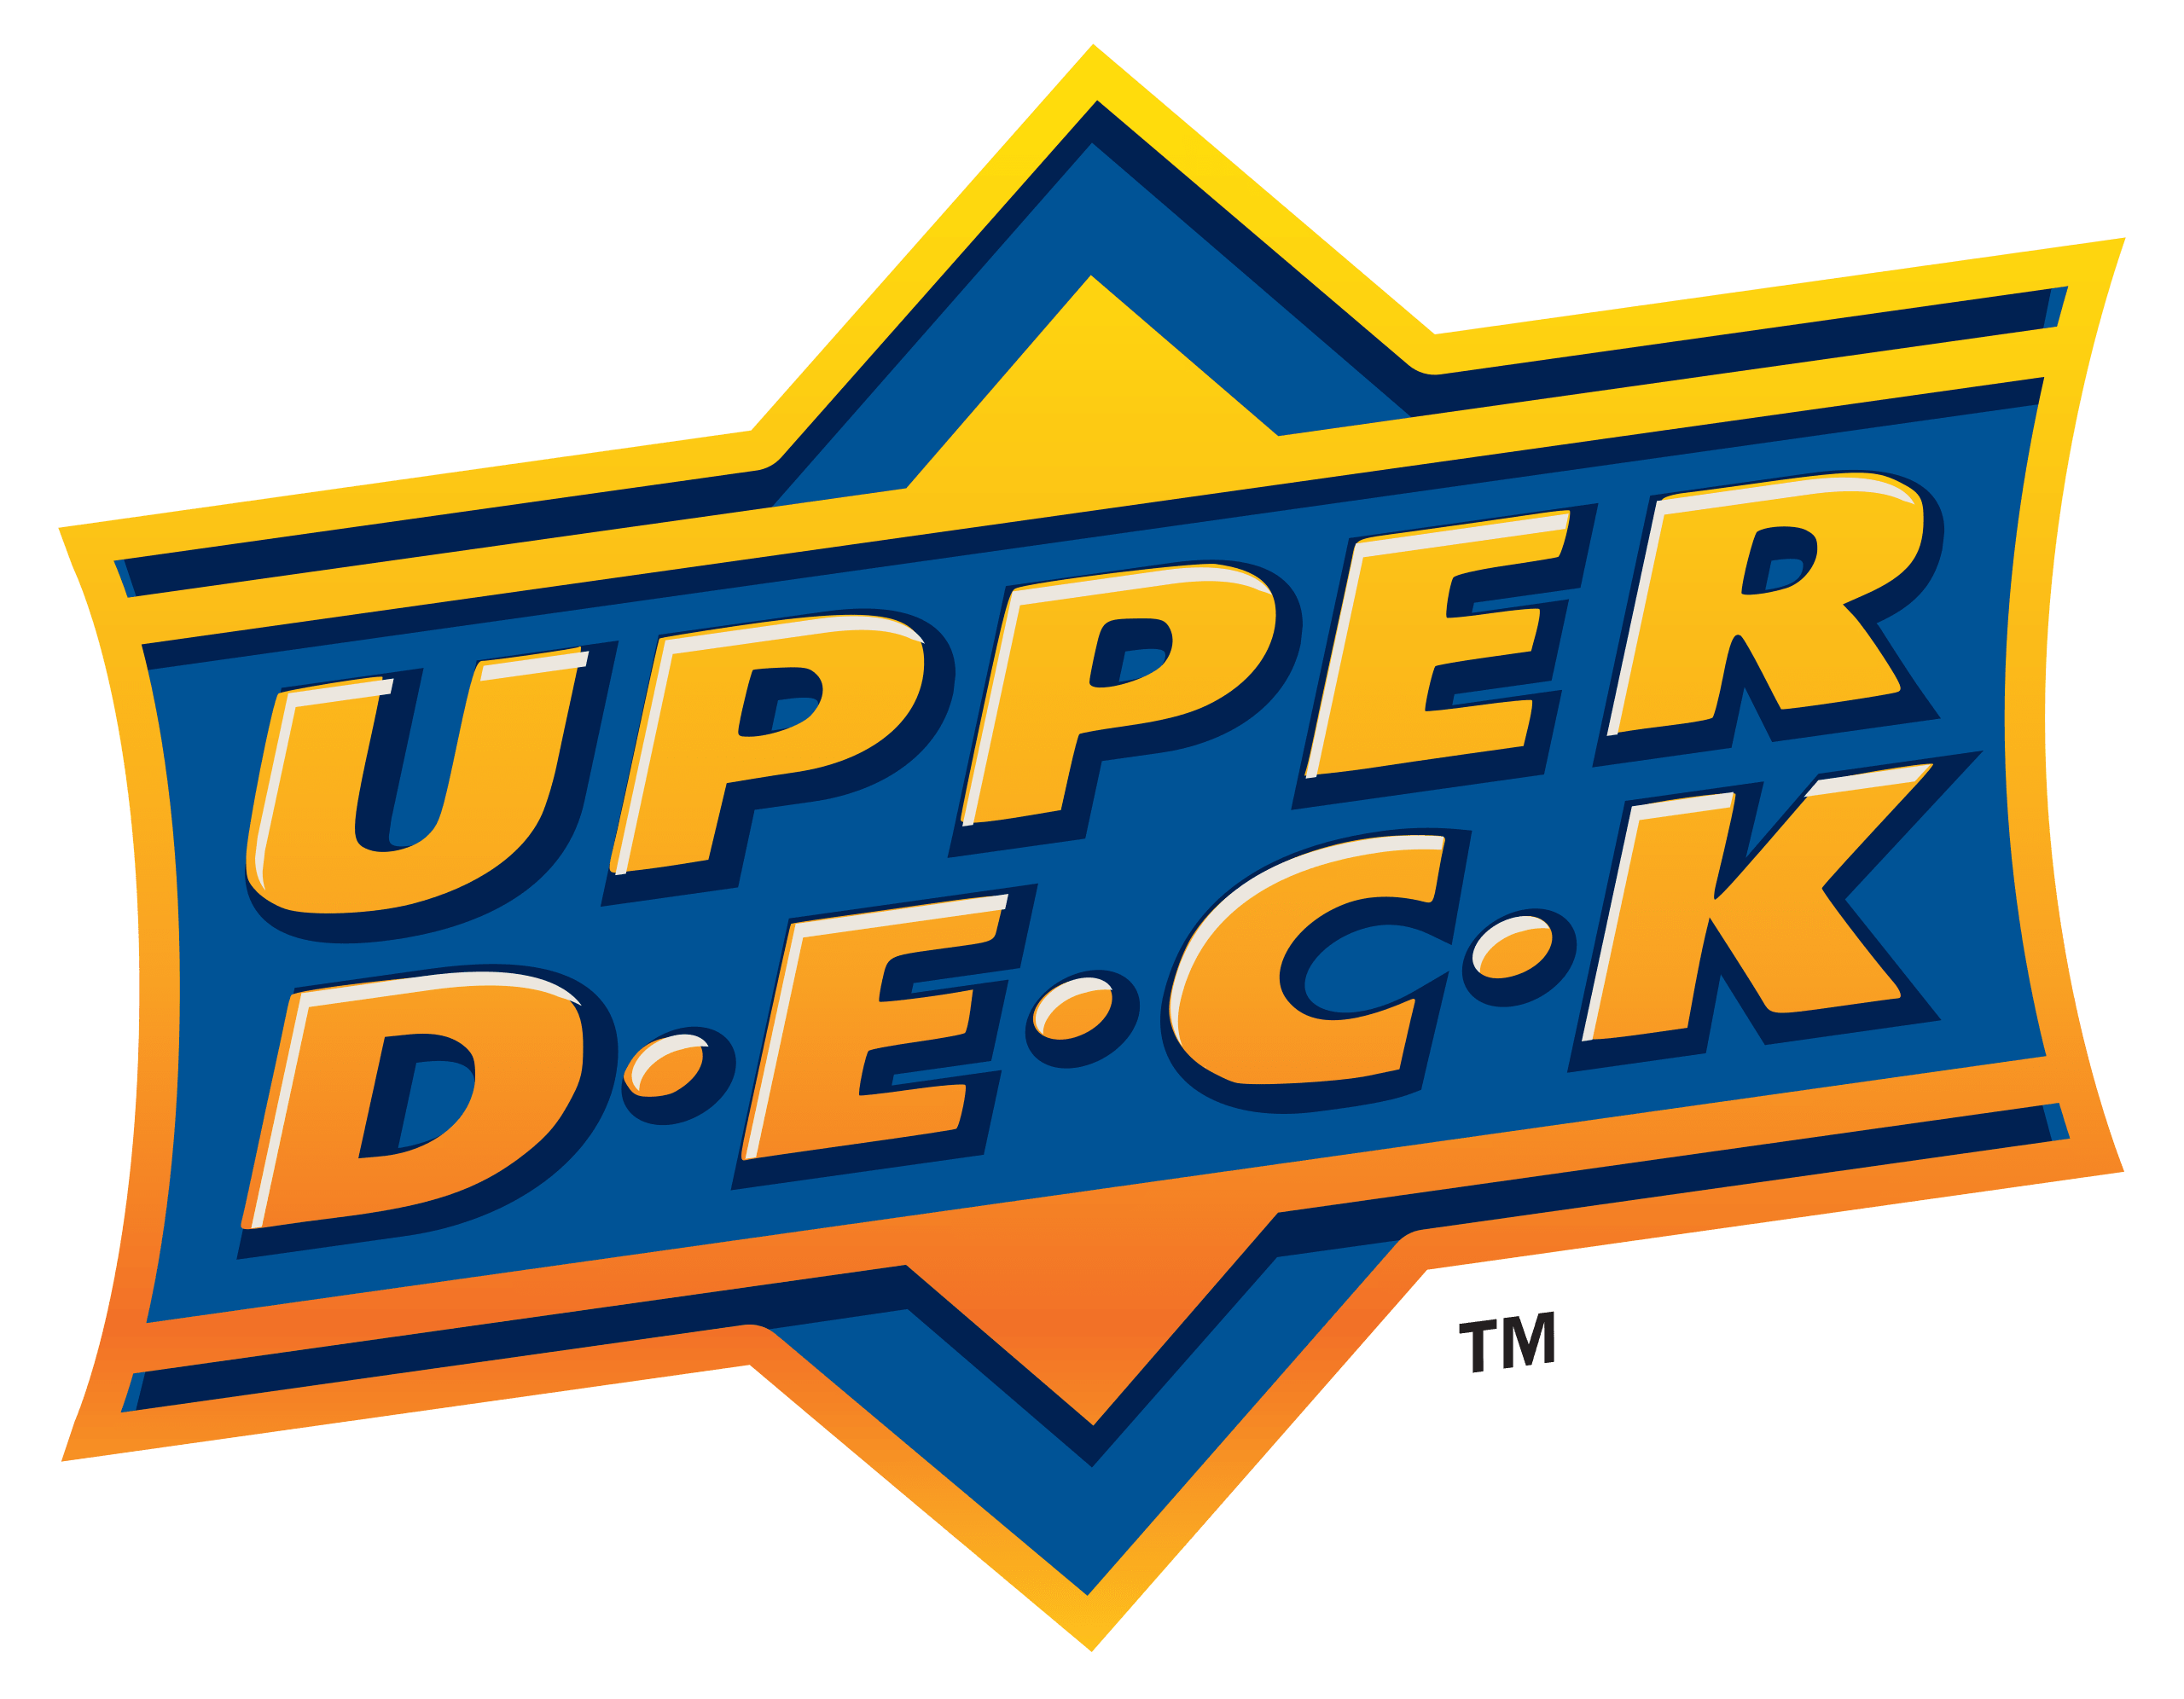 Hockey - 2022/23 - Upper Deck Artifacts - Retail Box (24 Packs) - Hobby Champion Inc